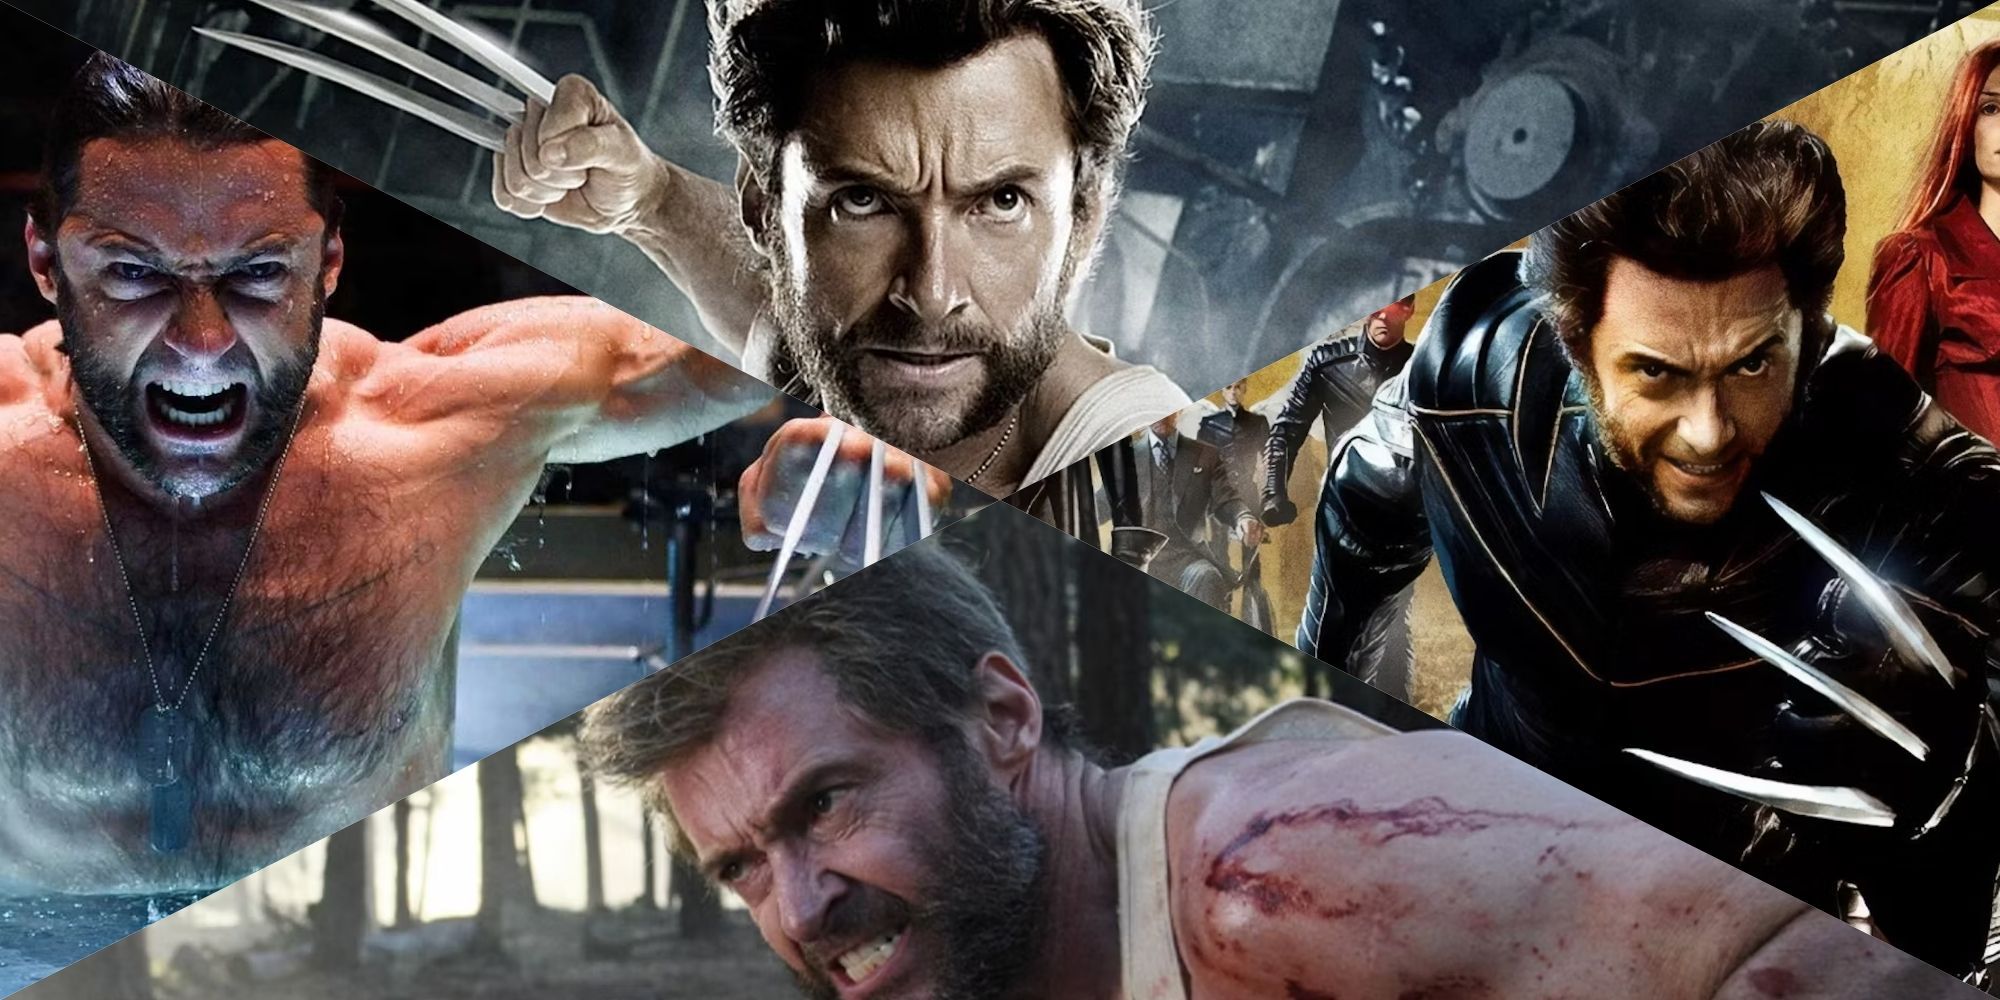 Hugh Jackman in Logan, Origins, The Wolverine and Last Stand